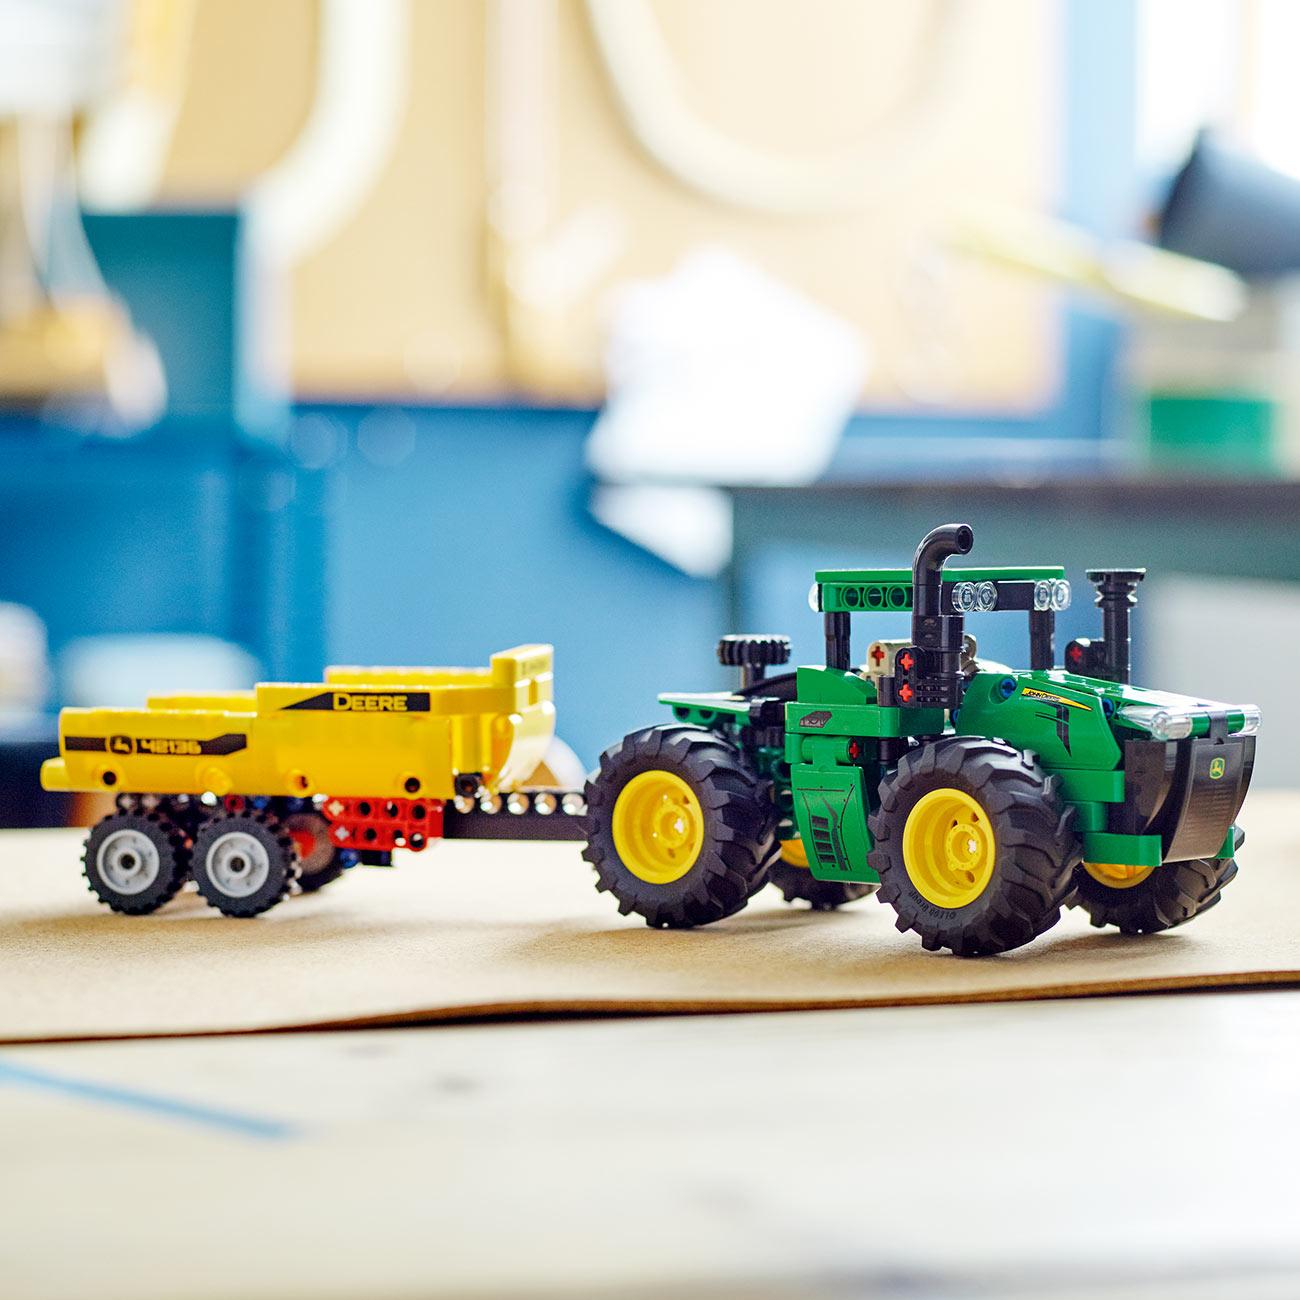 Selected image for LEGO Kocke Džon Dir 9620R 4WD traktor 42136